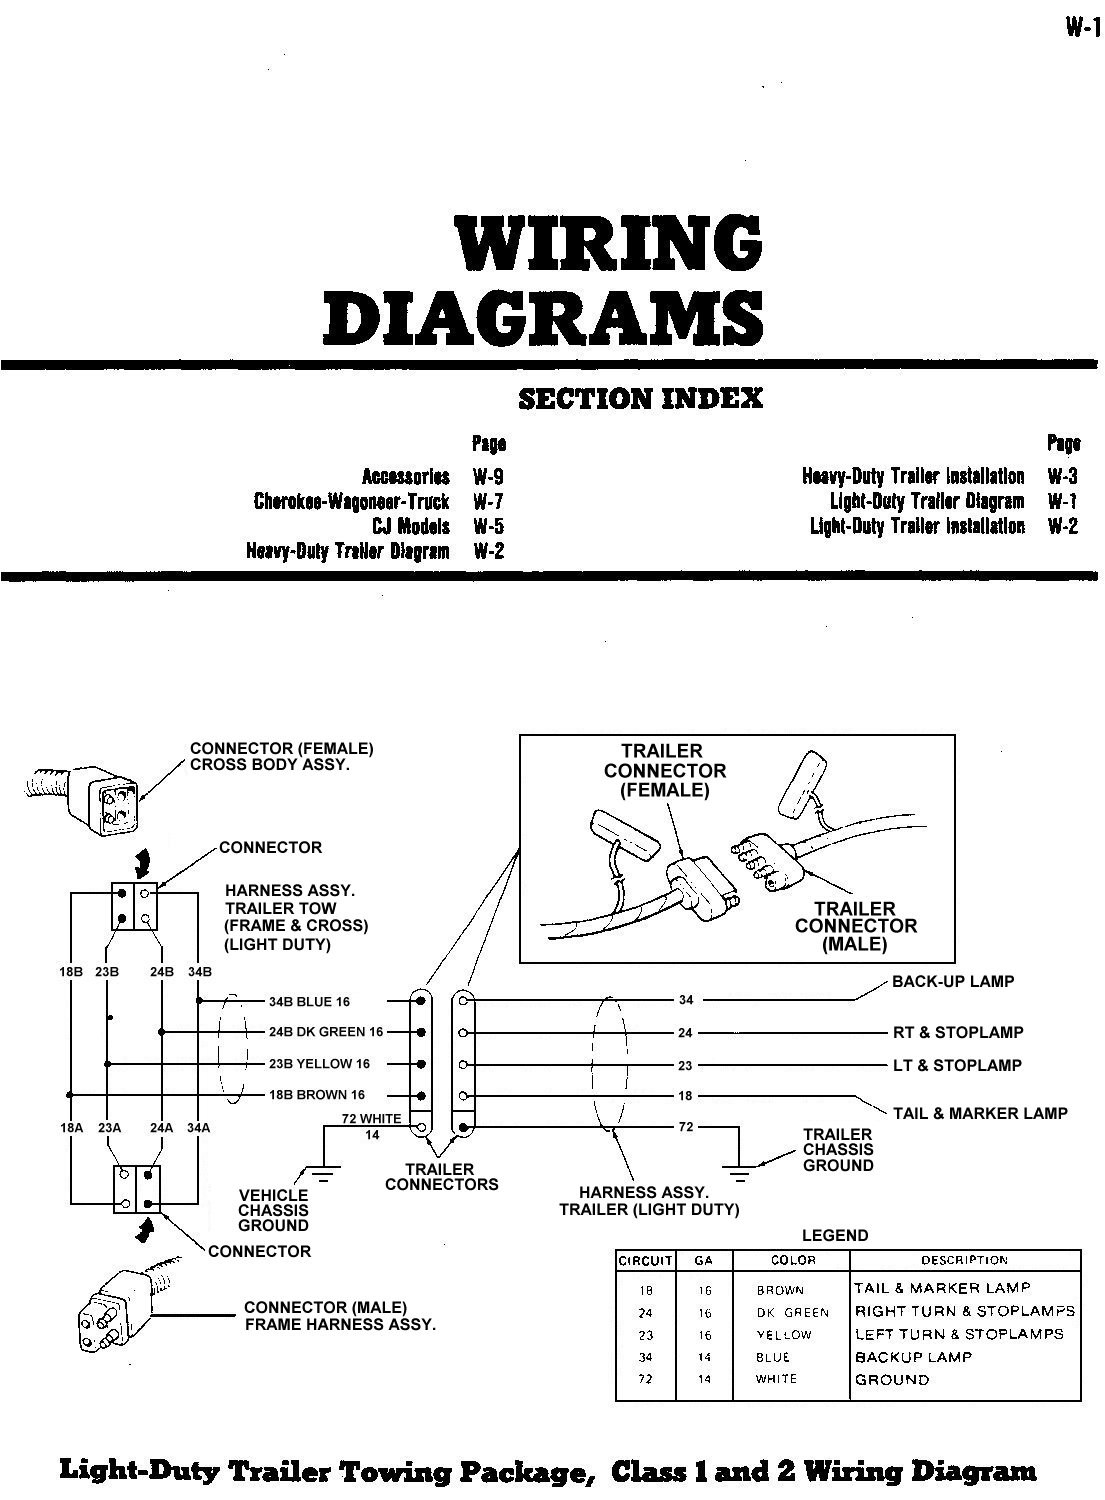 2002 Jeep Wrangler Turn Signal Wiring Diagram from oljeep.com